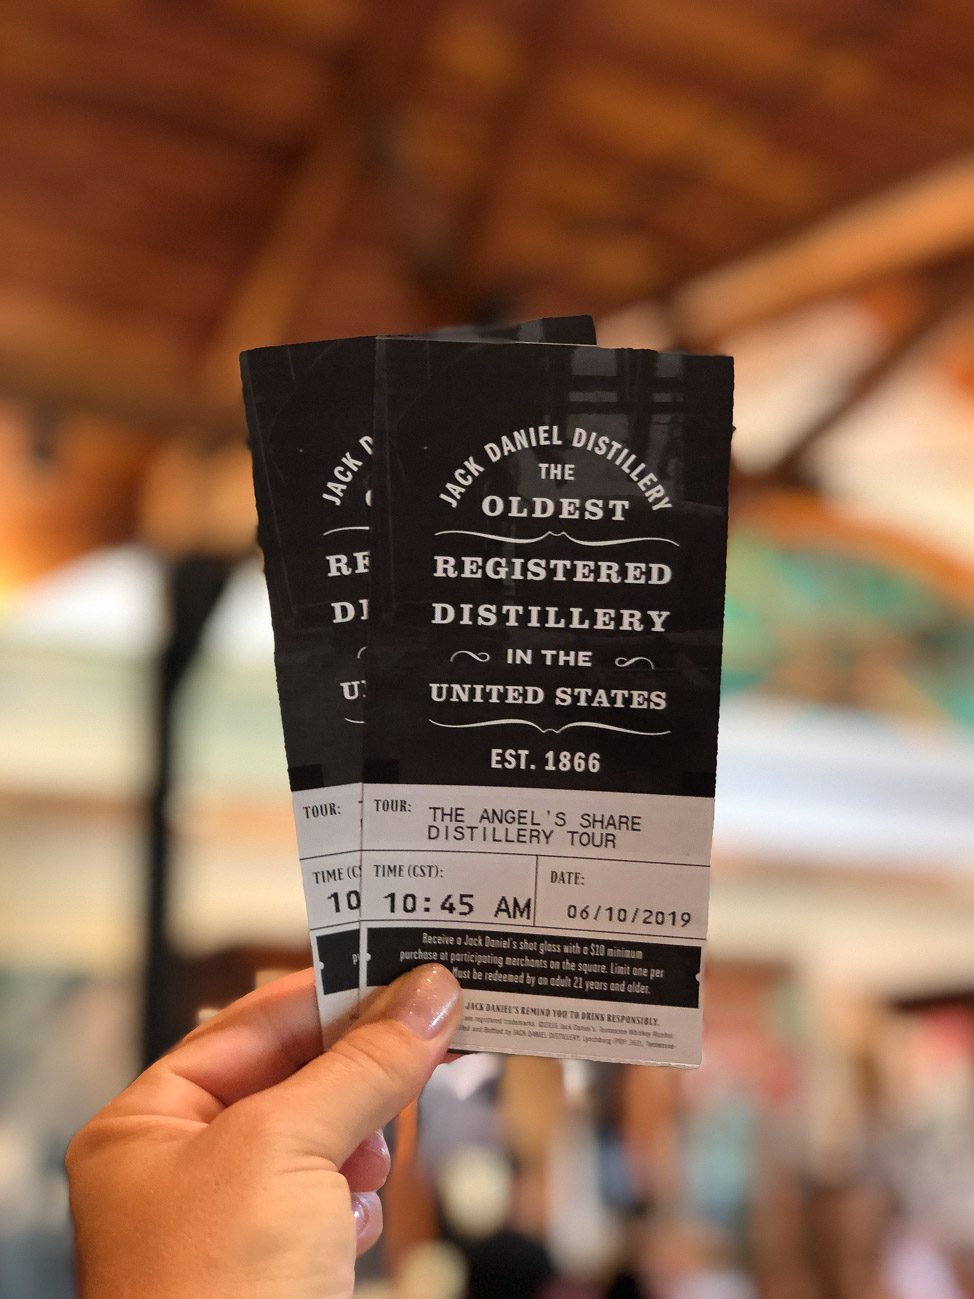 Jack Daniel's Tours at the Lynchburg Distillery